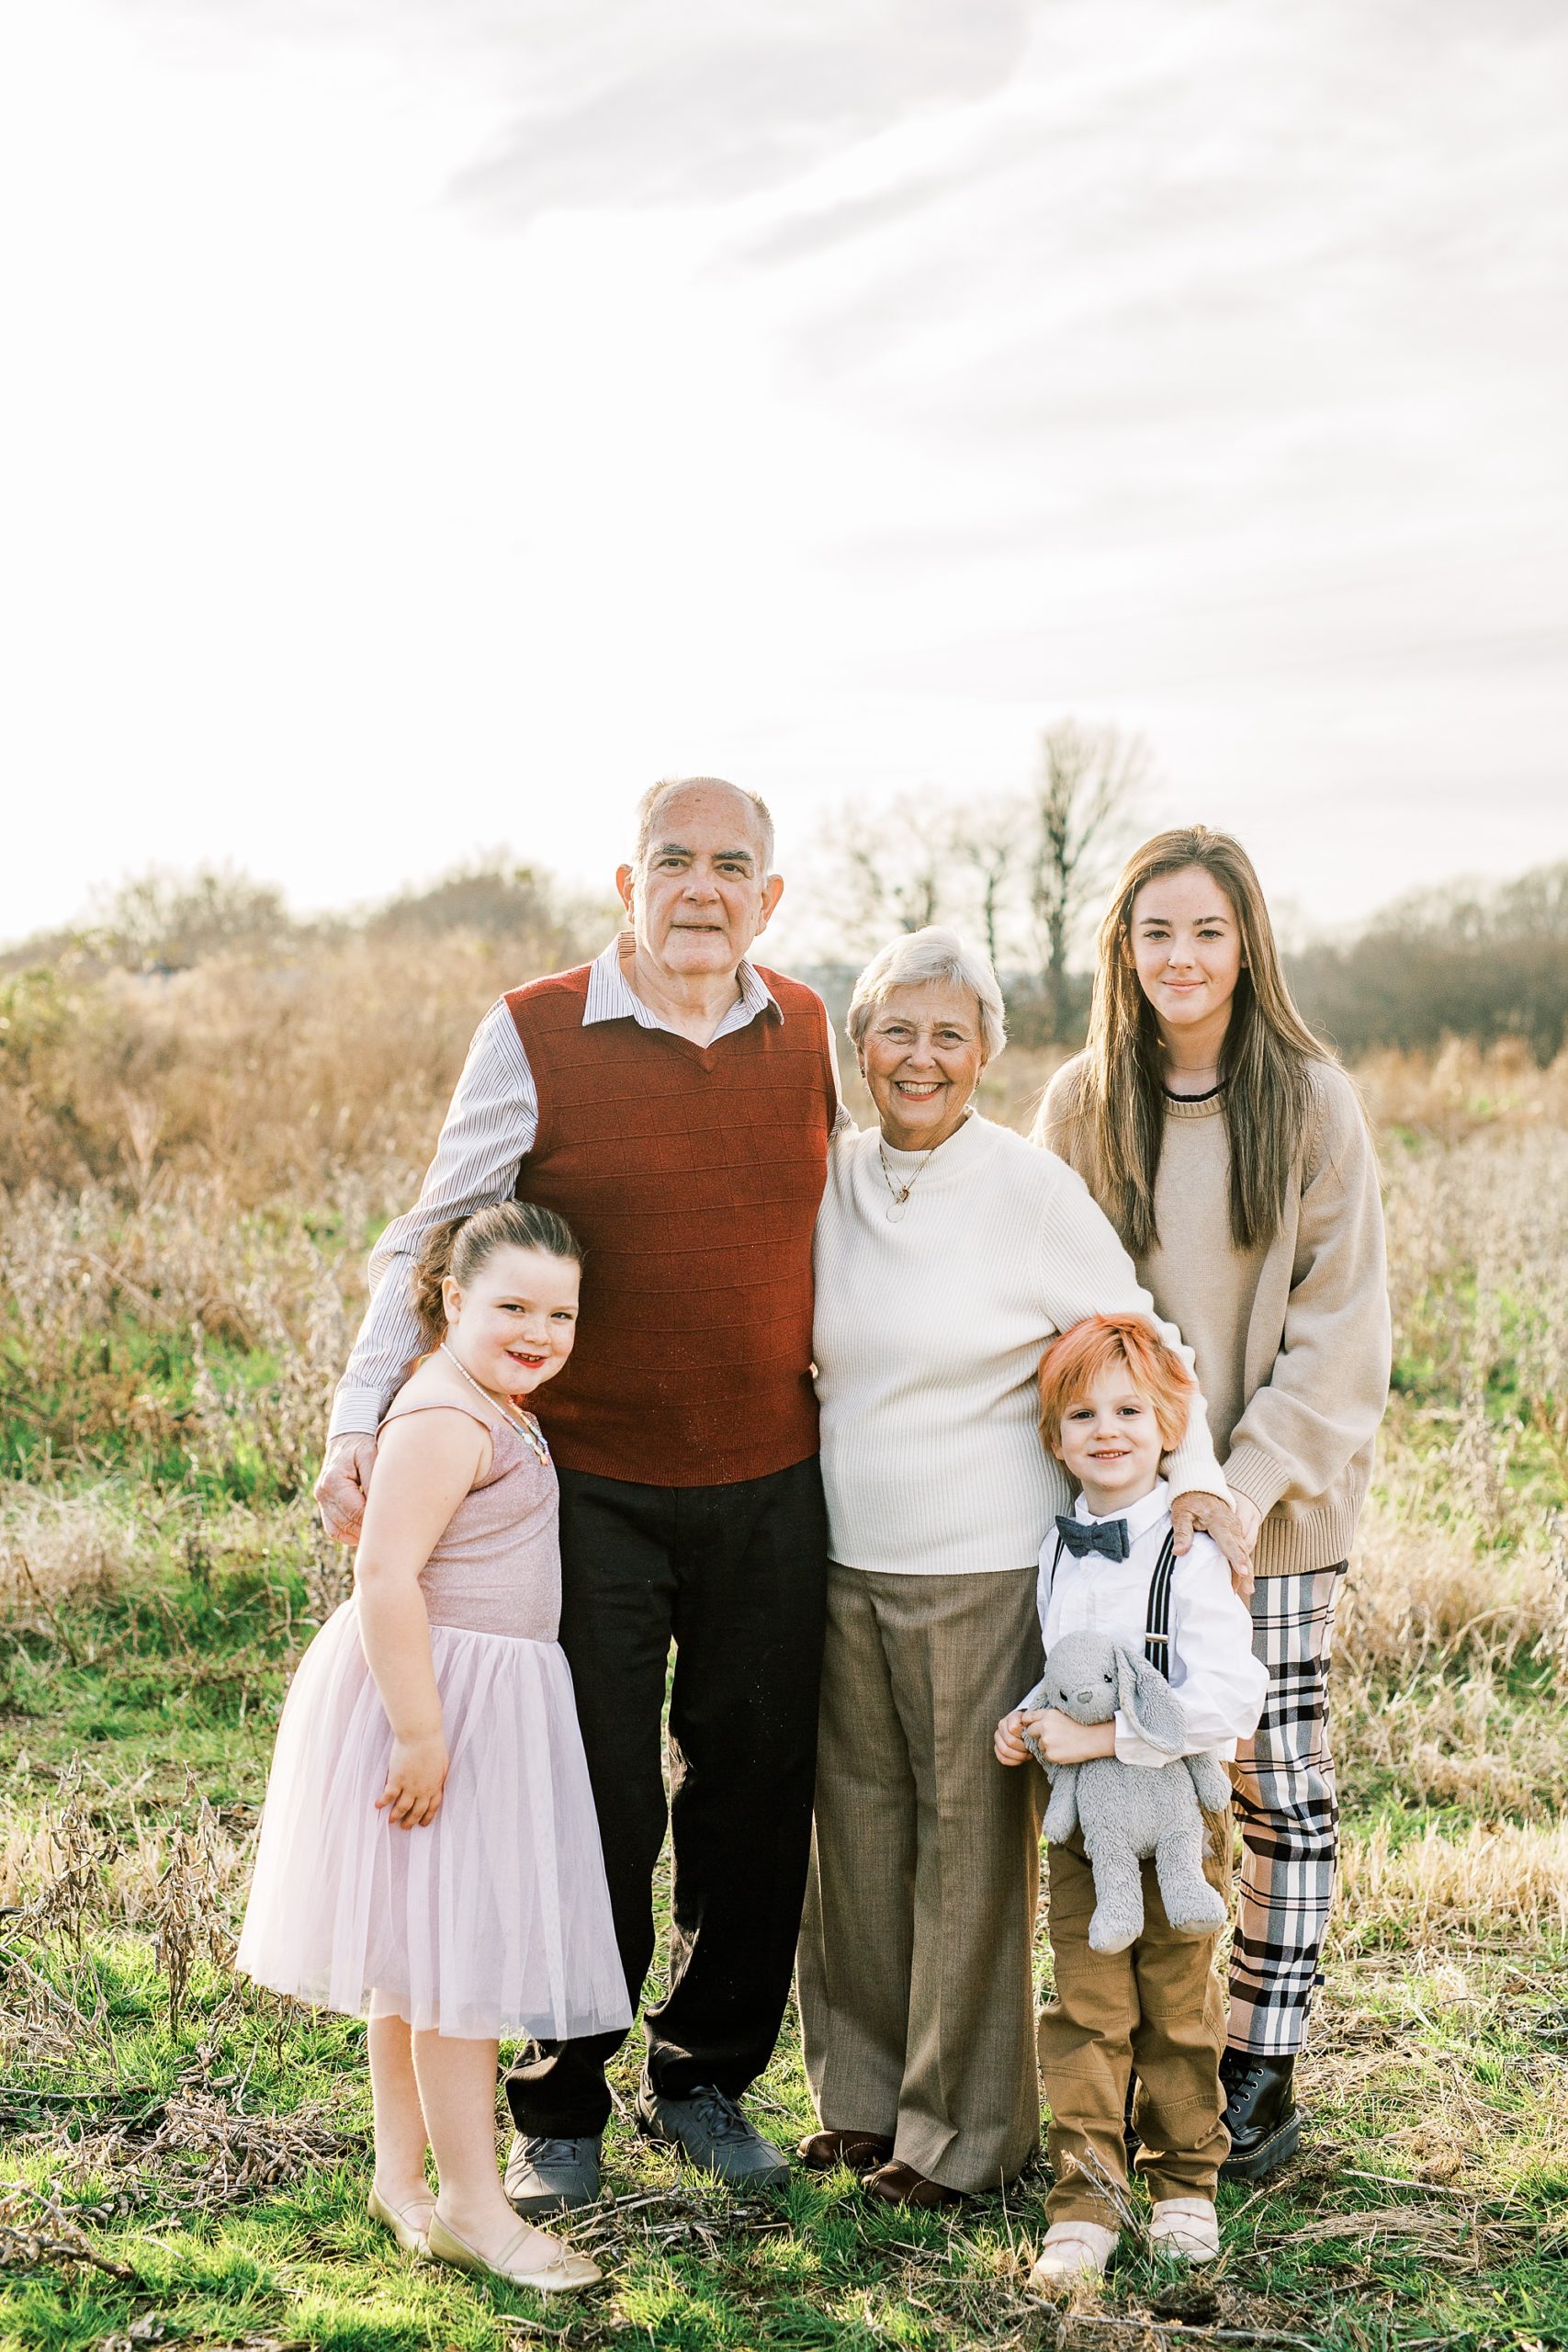 grandparents pose with grandchildren during 50th anniversary photos